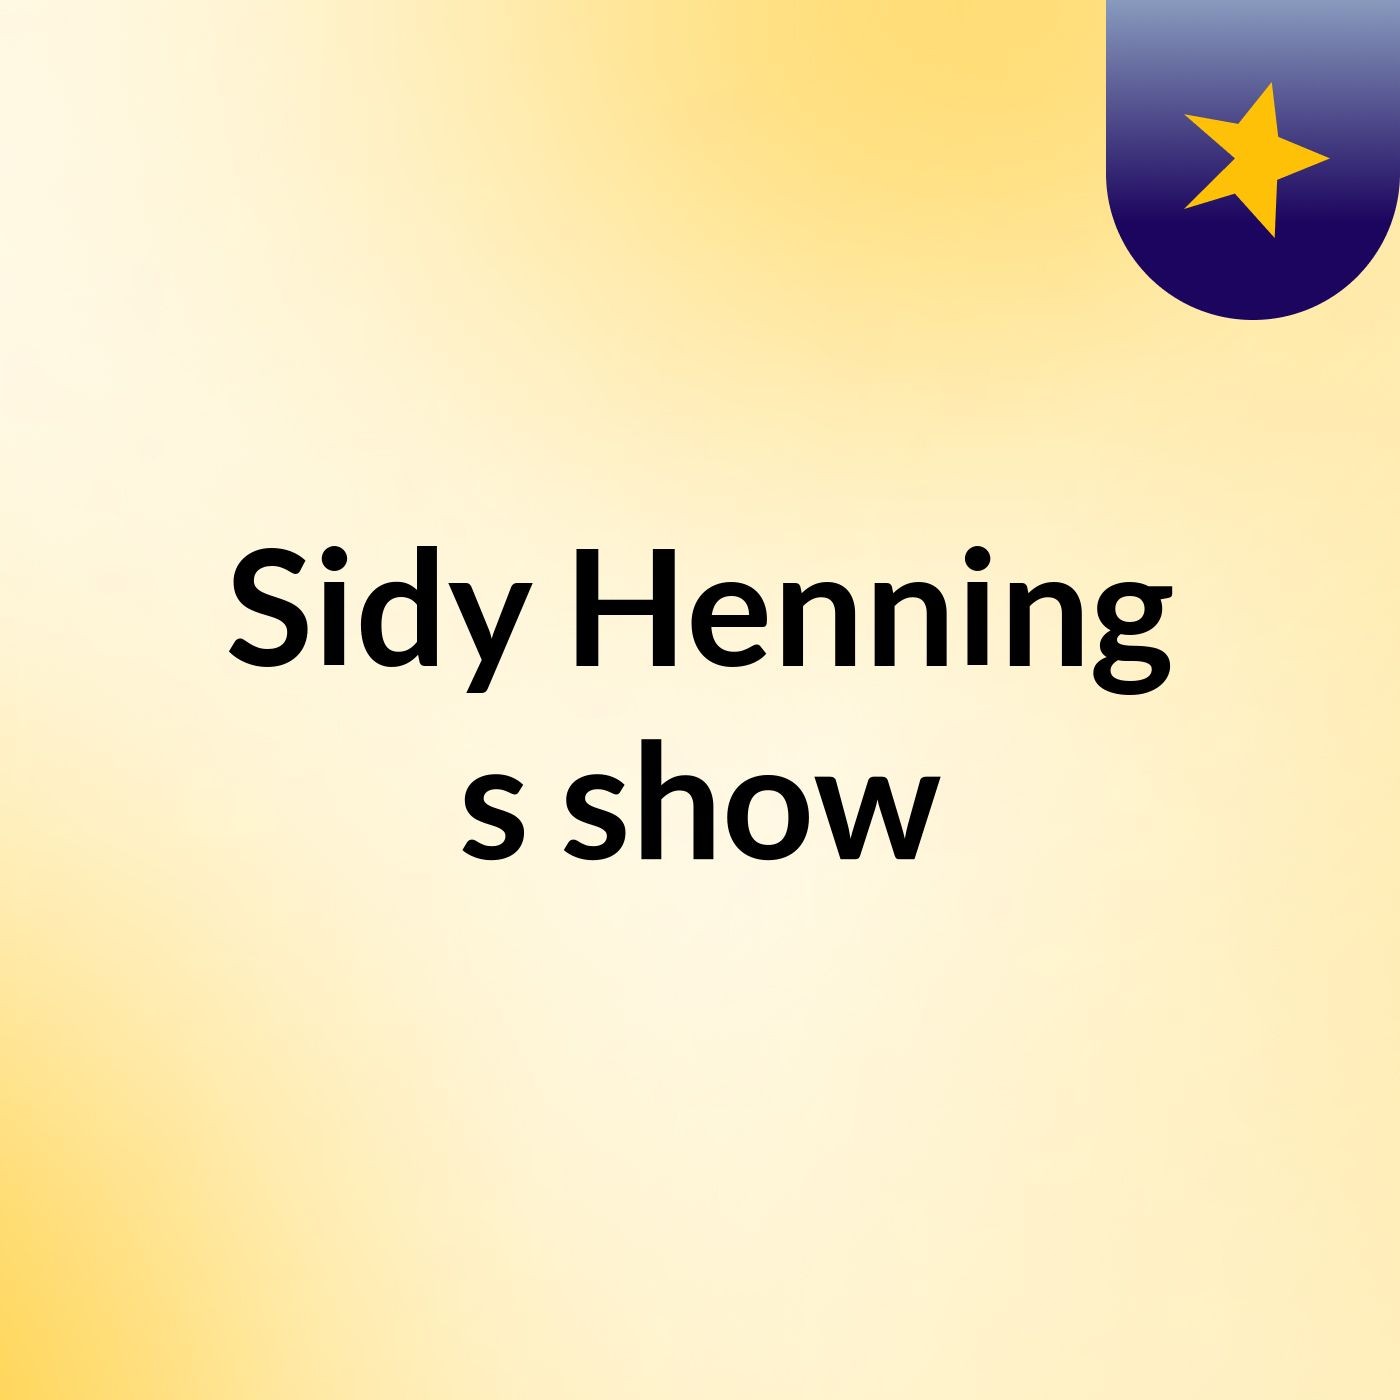 Sidy Henning's show